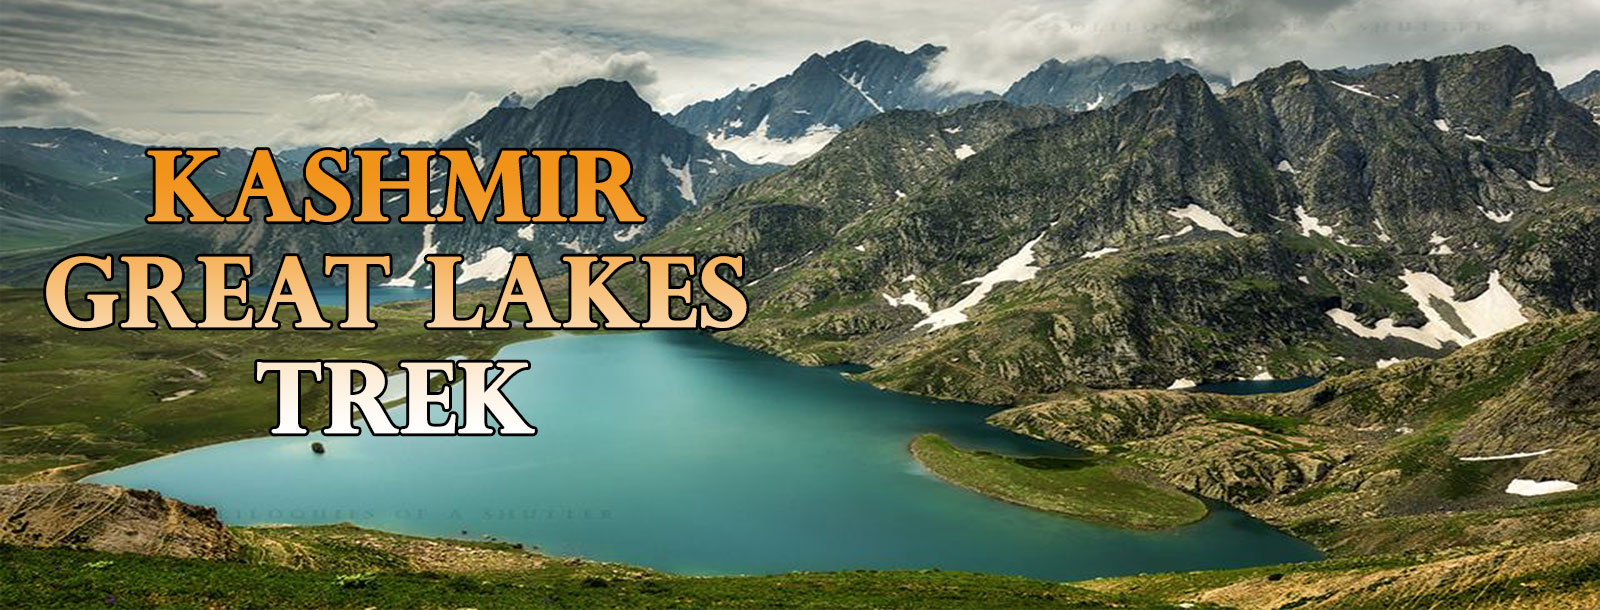 kashmir great lakes trek